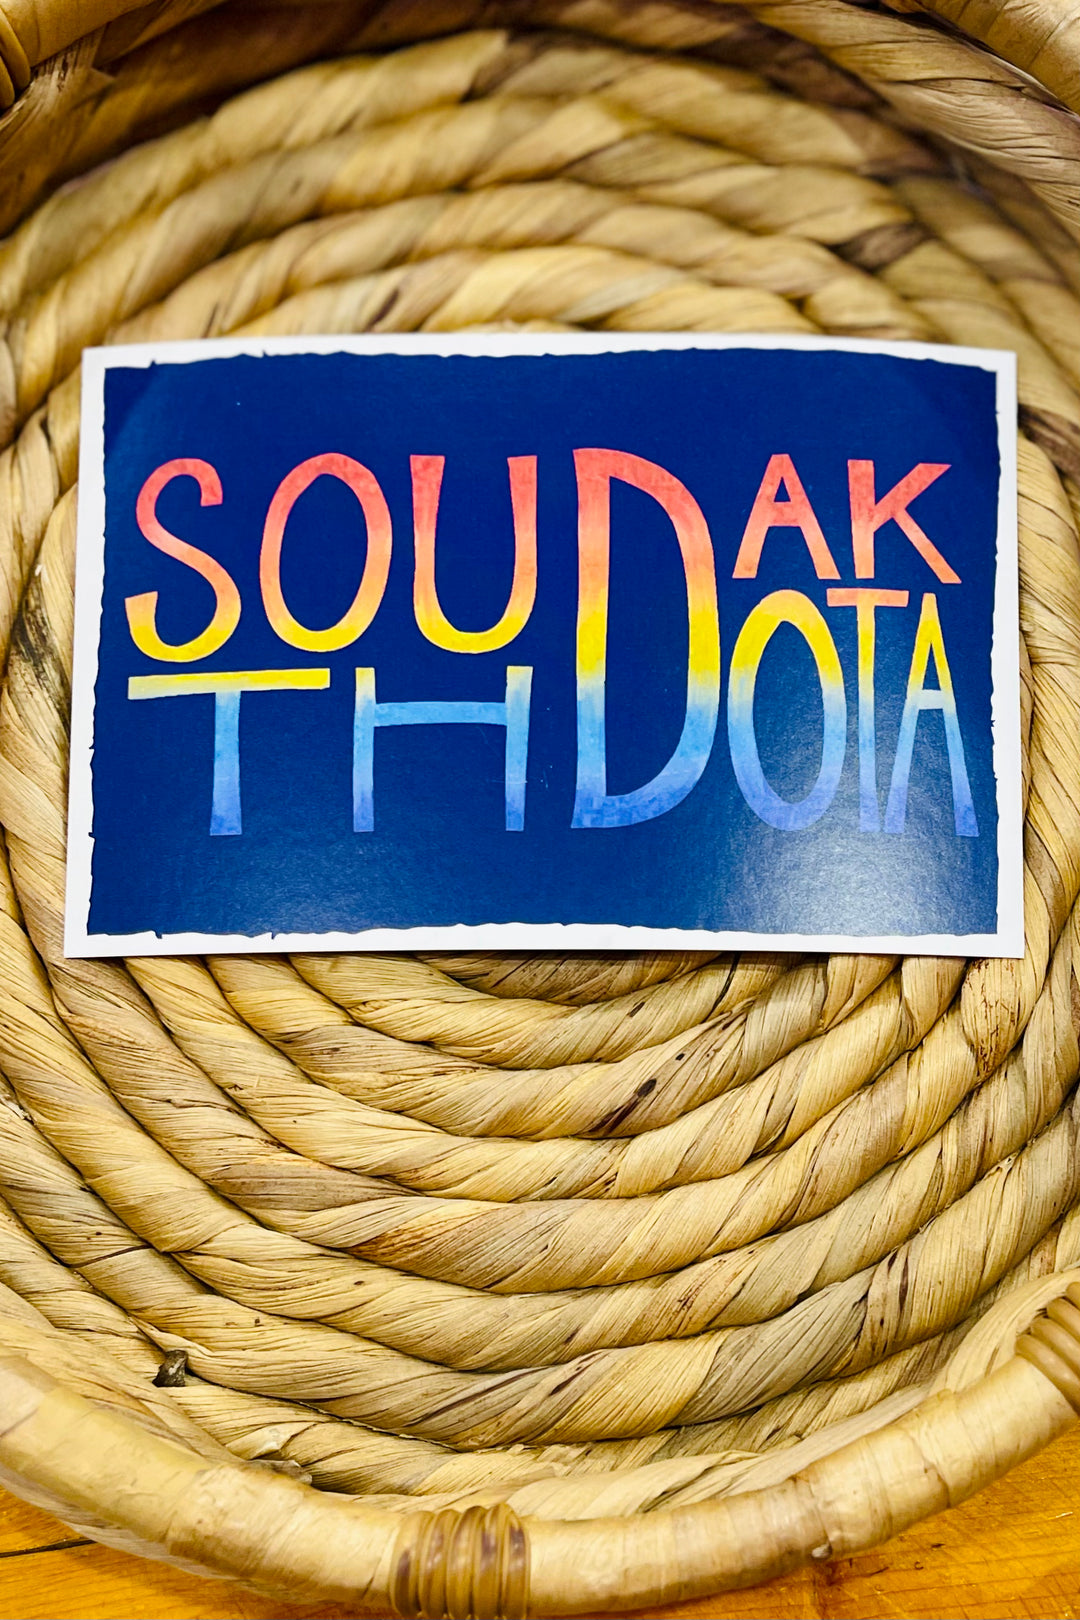 South Dakota (Colorful Letters) - Postcard